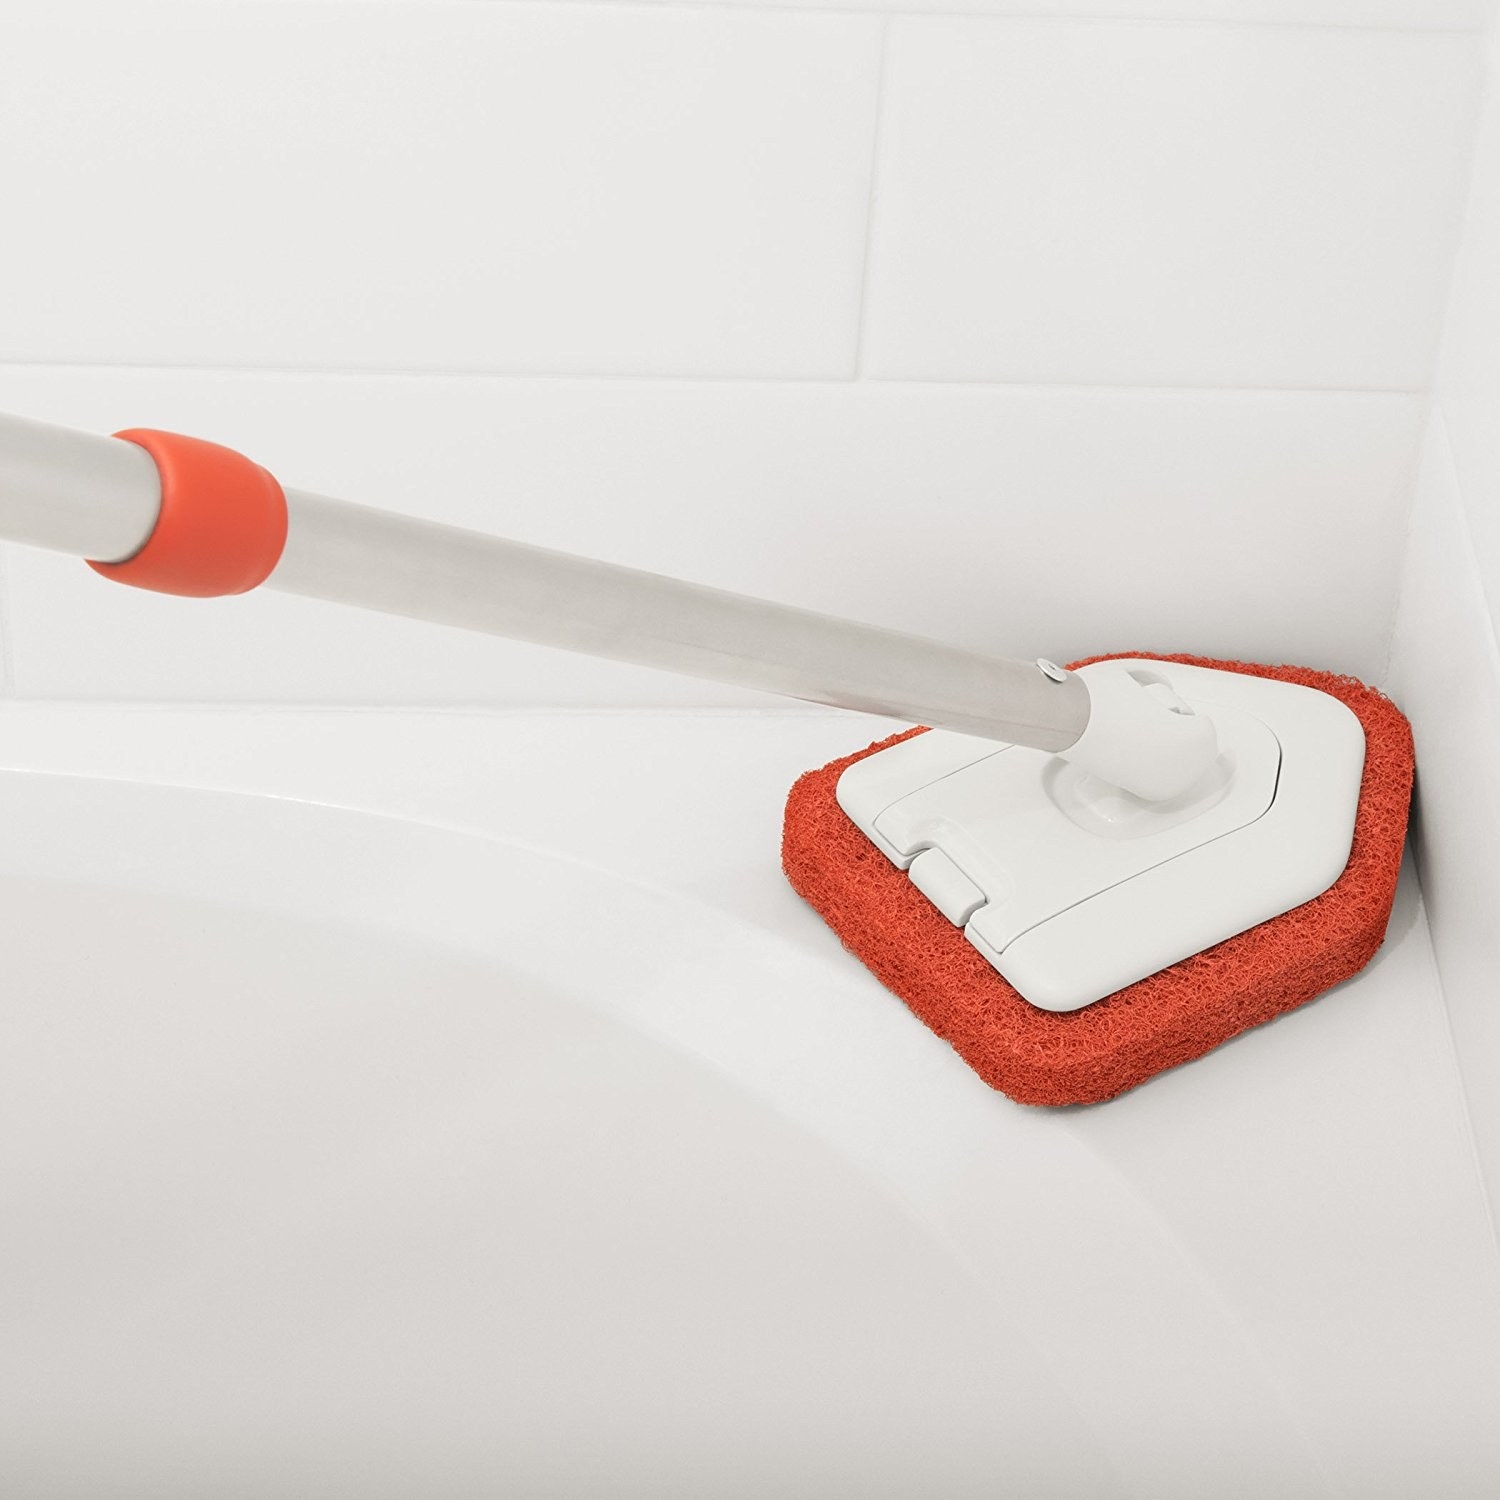 scrubber being used in bathtub corner